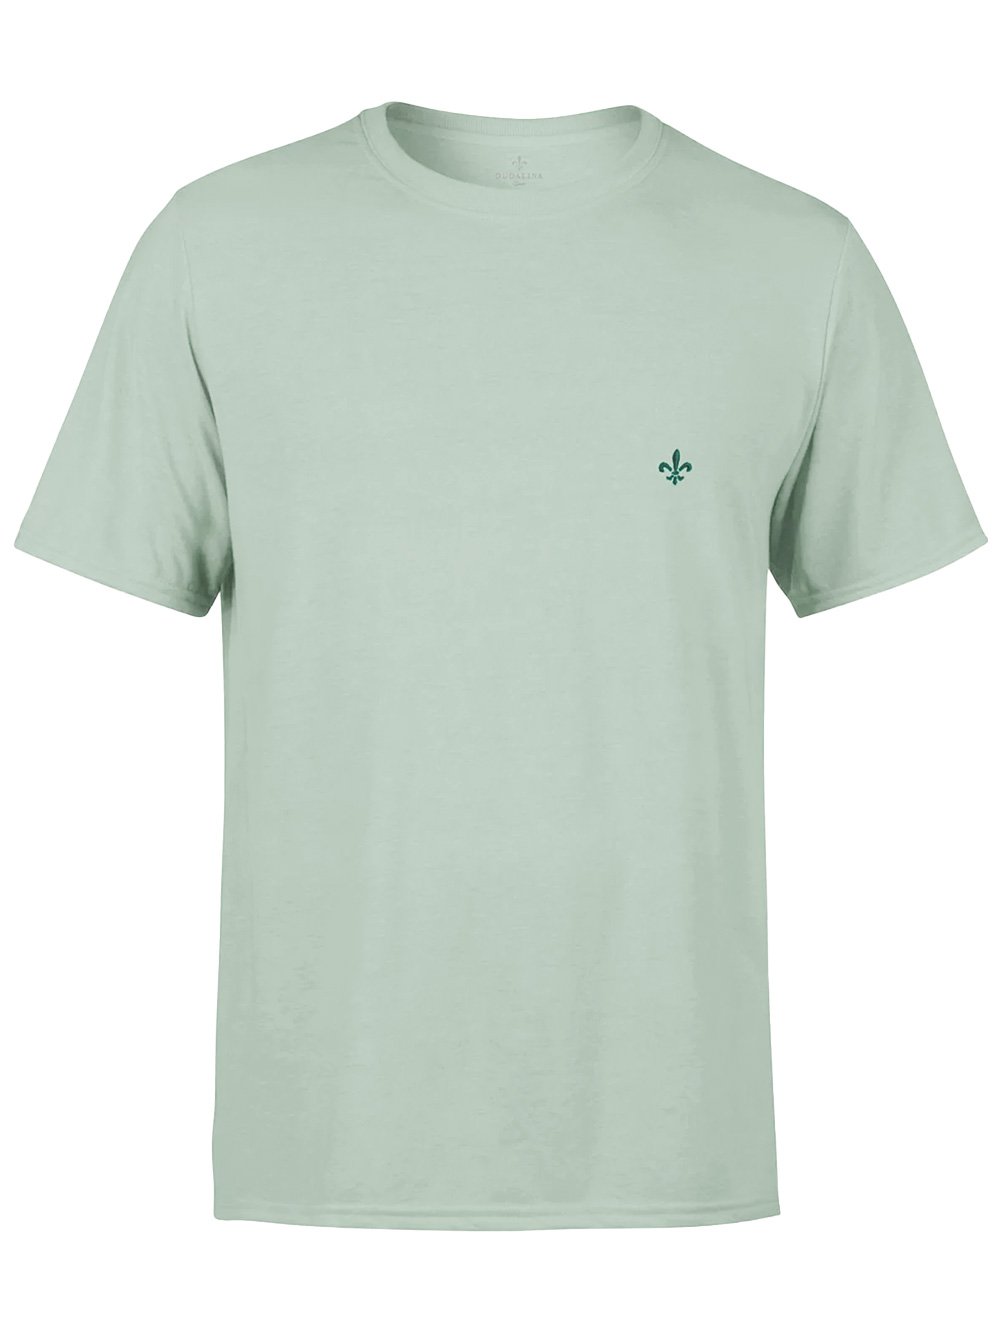 Camiseta Dudalina Masculina Soft Pima Cotton Verde Claro